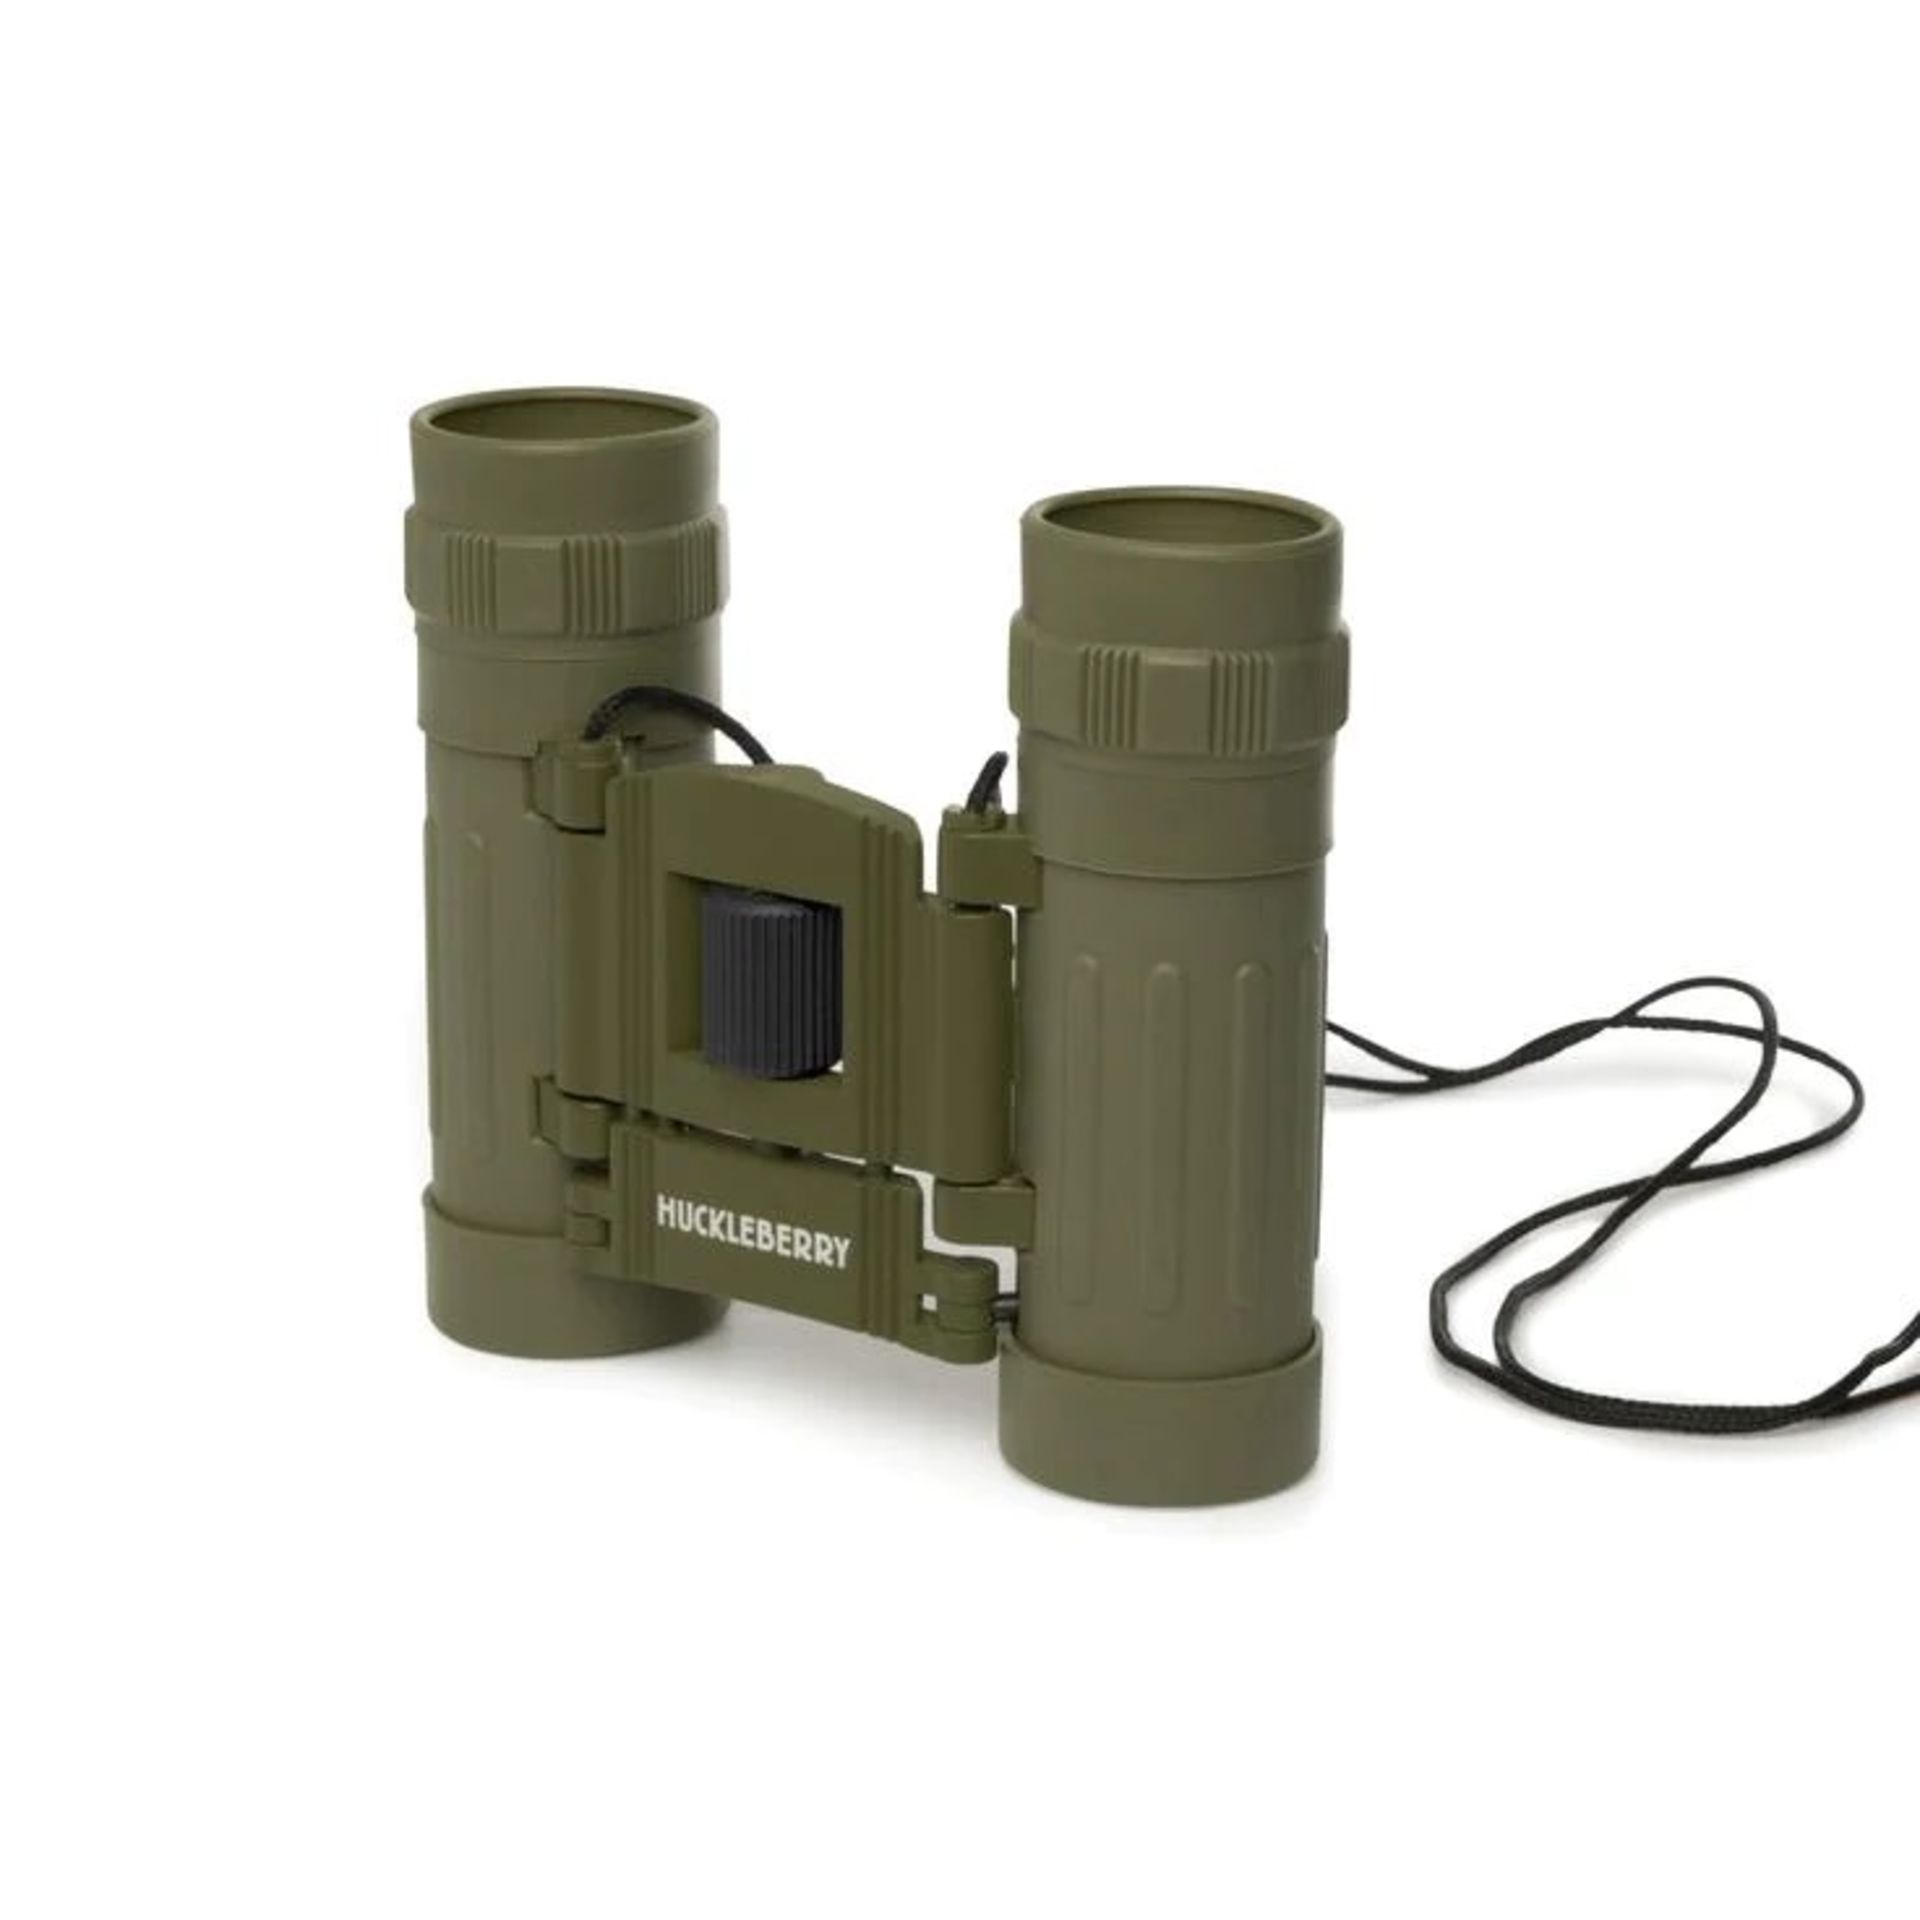 5 x Kikkerland Huckleberry Childrens Binoculars - New Boxed Stock - RRP £160 - Image 4 of 4